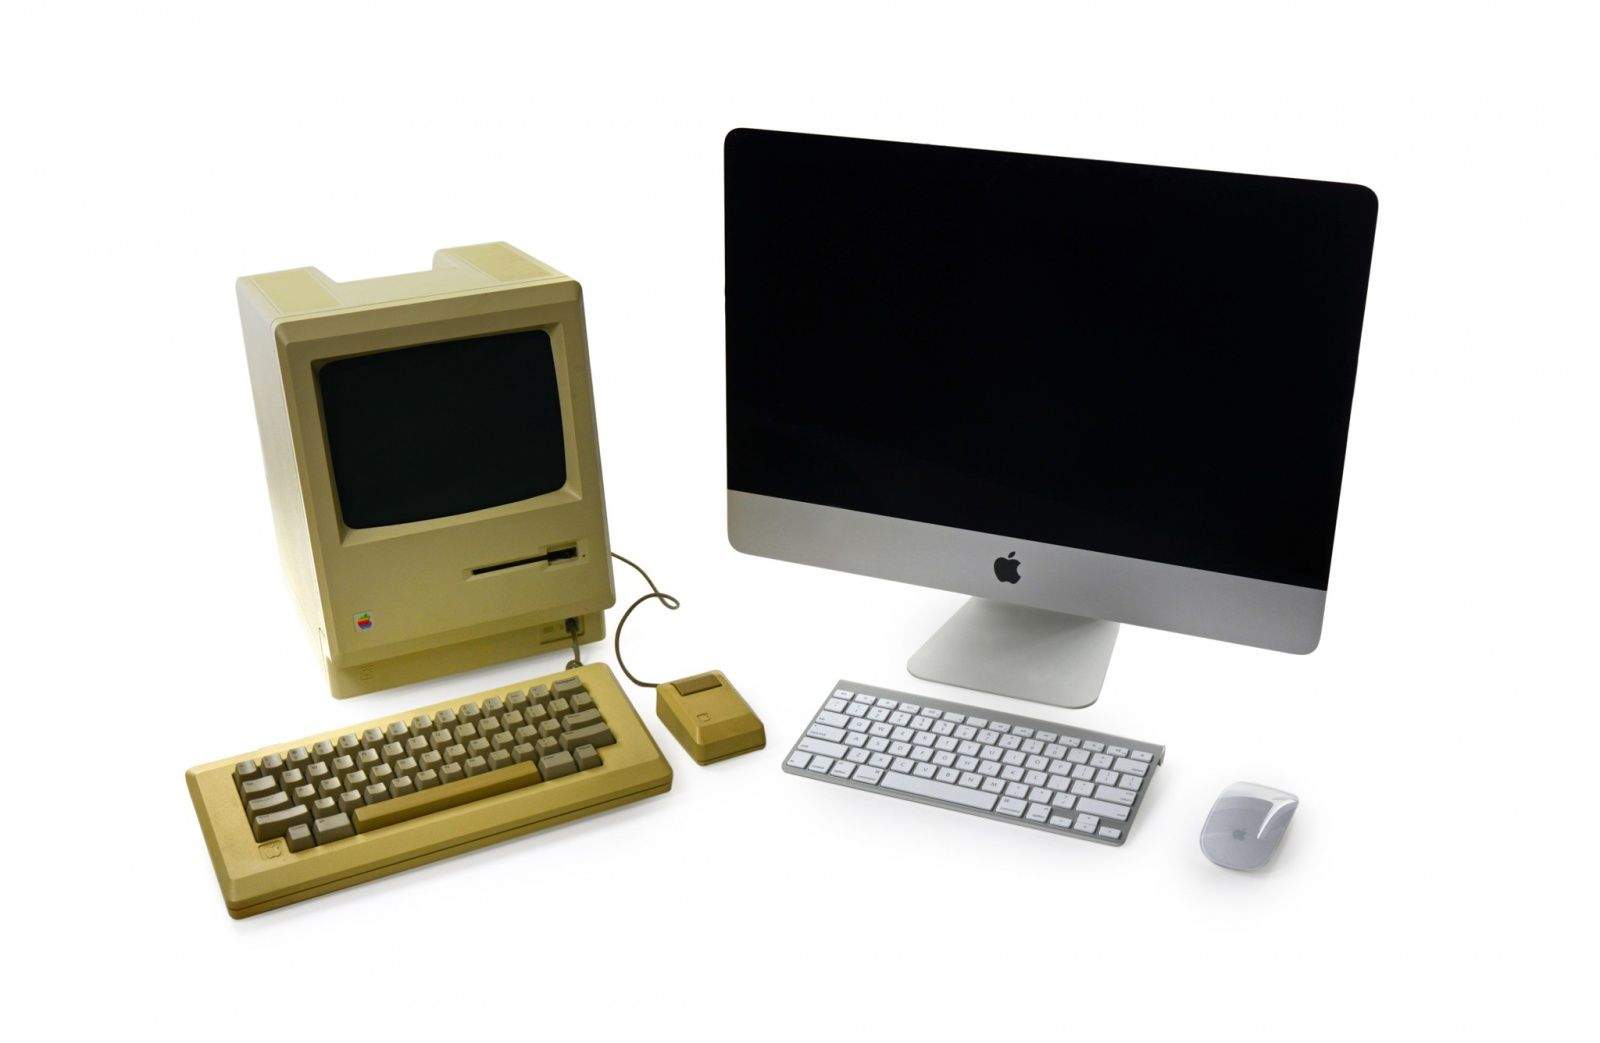 128k Mac and 21-inch iMac